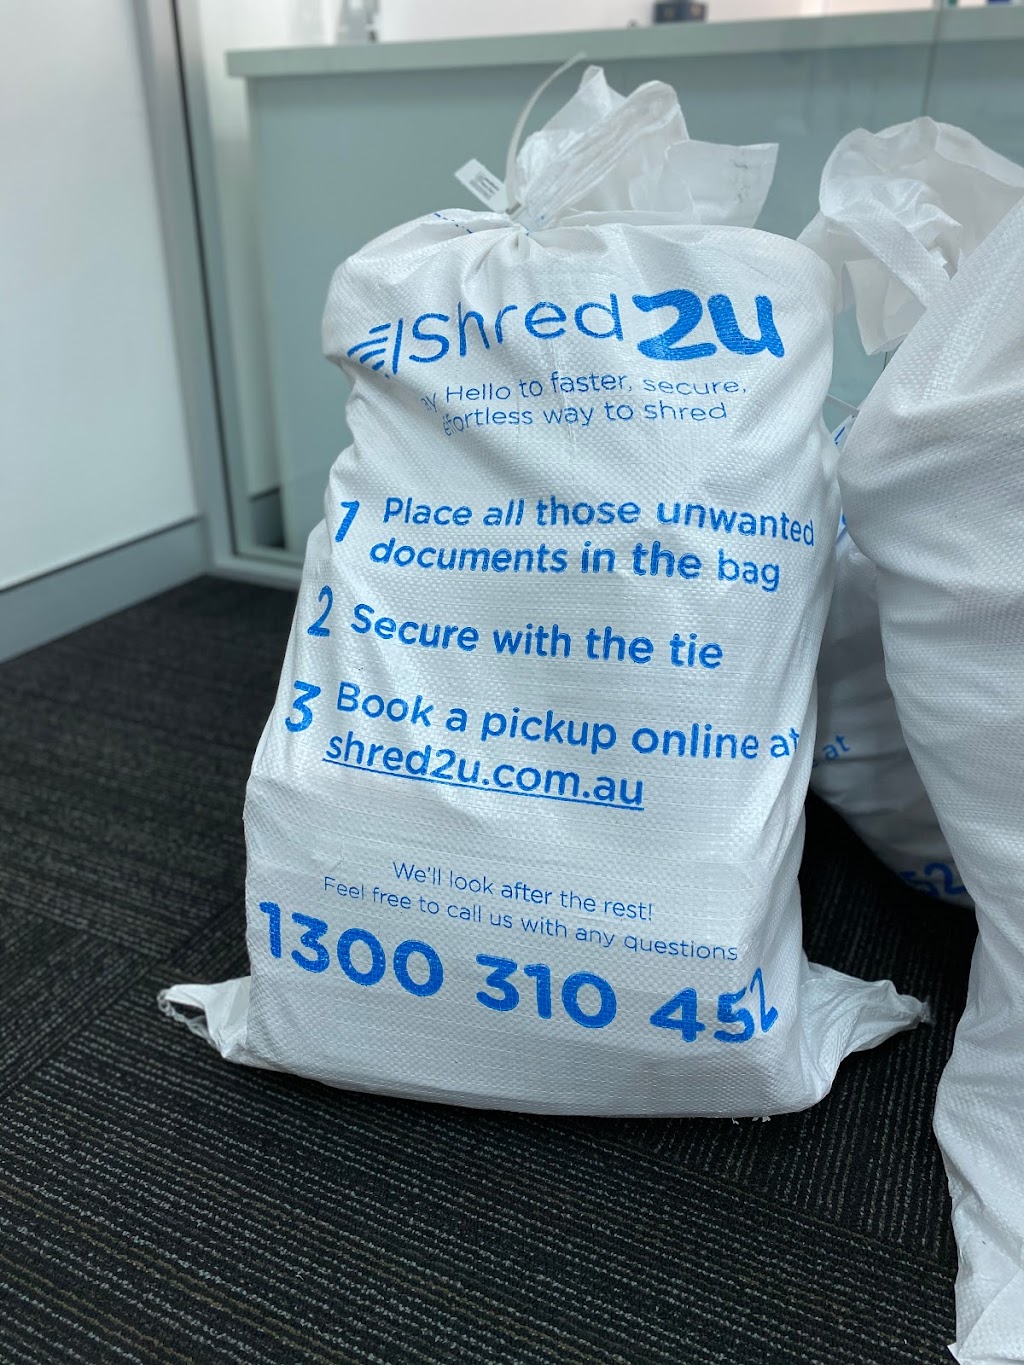 Shred2u | Level 4, Suite 4.11, 55 Miller St, Pyrmont NSW 2009, Australia | Phone: 1300 310 452